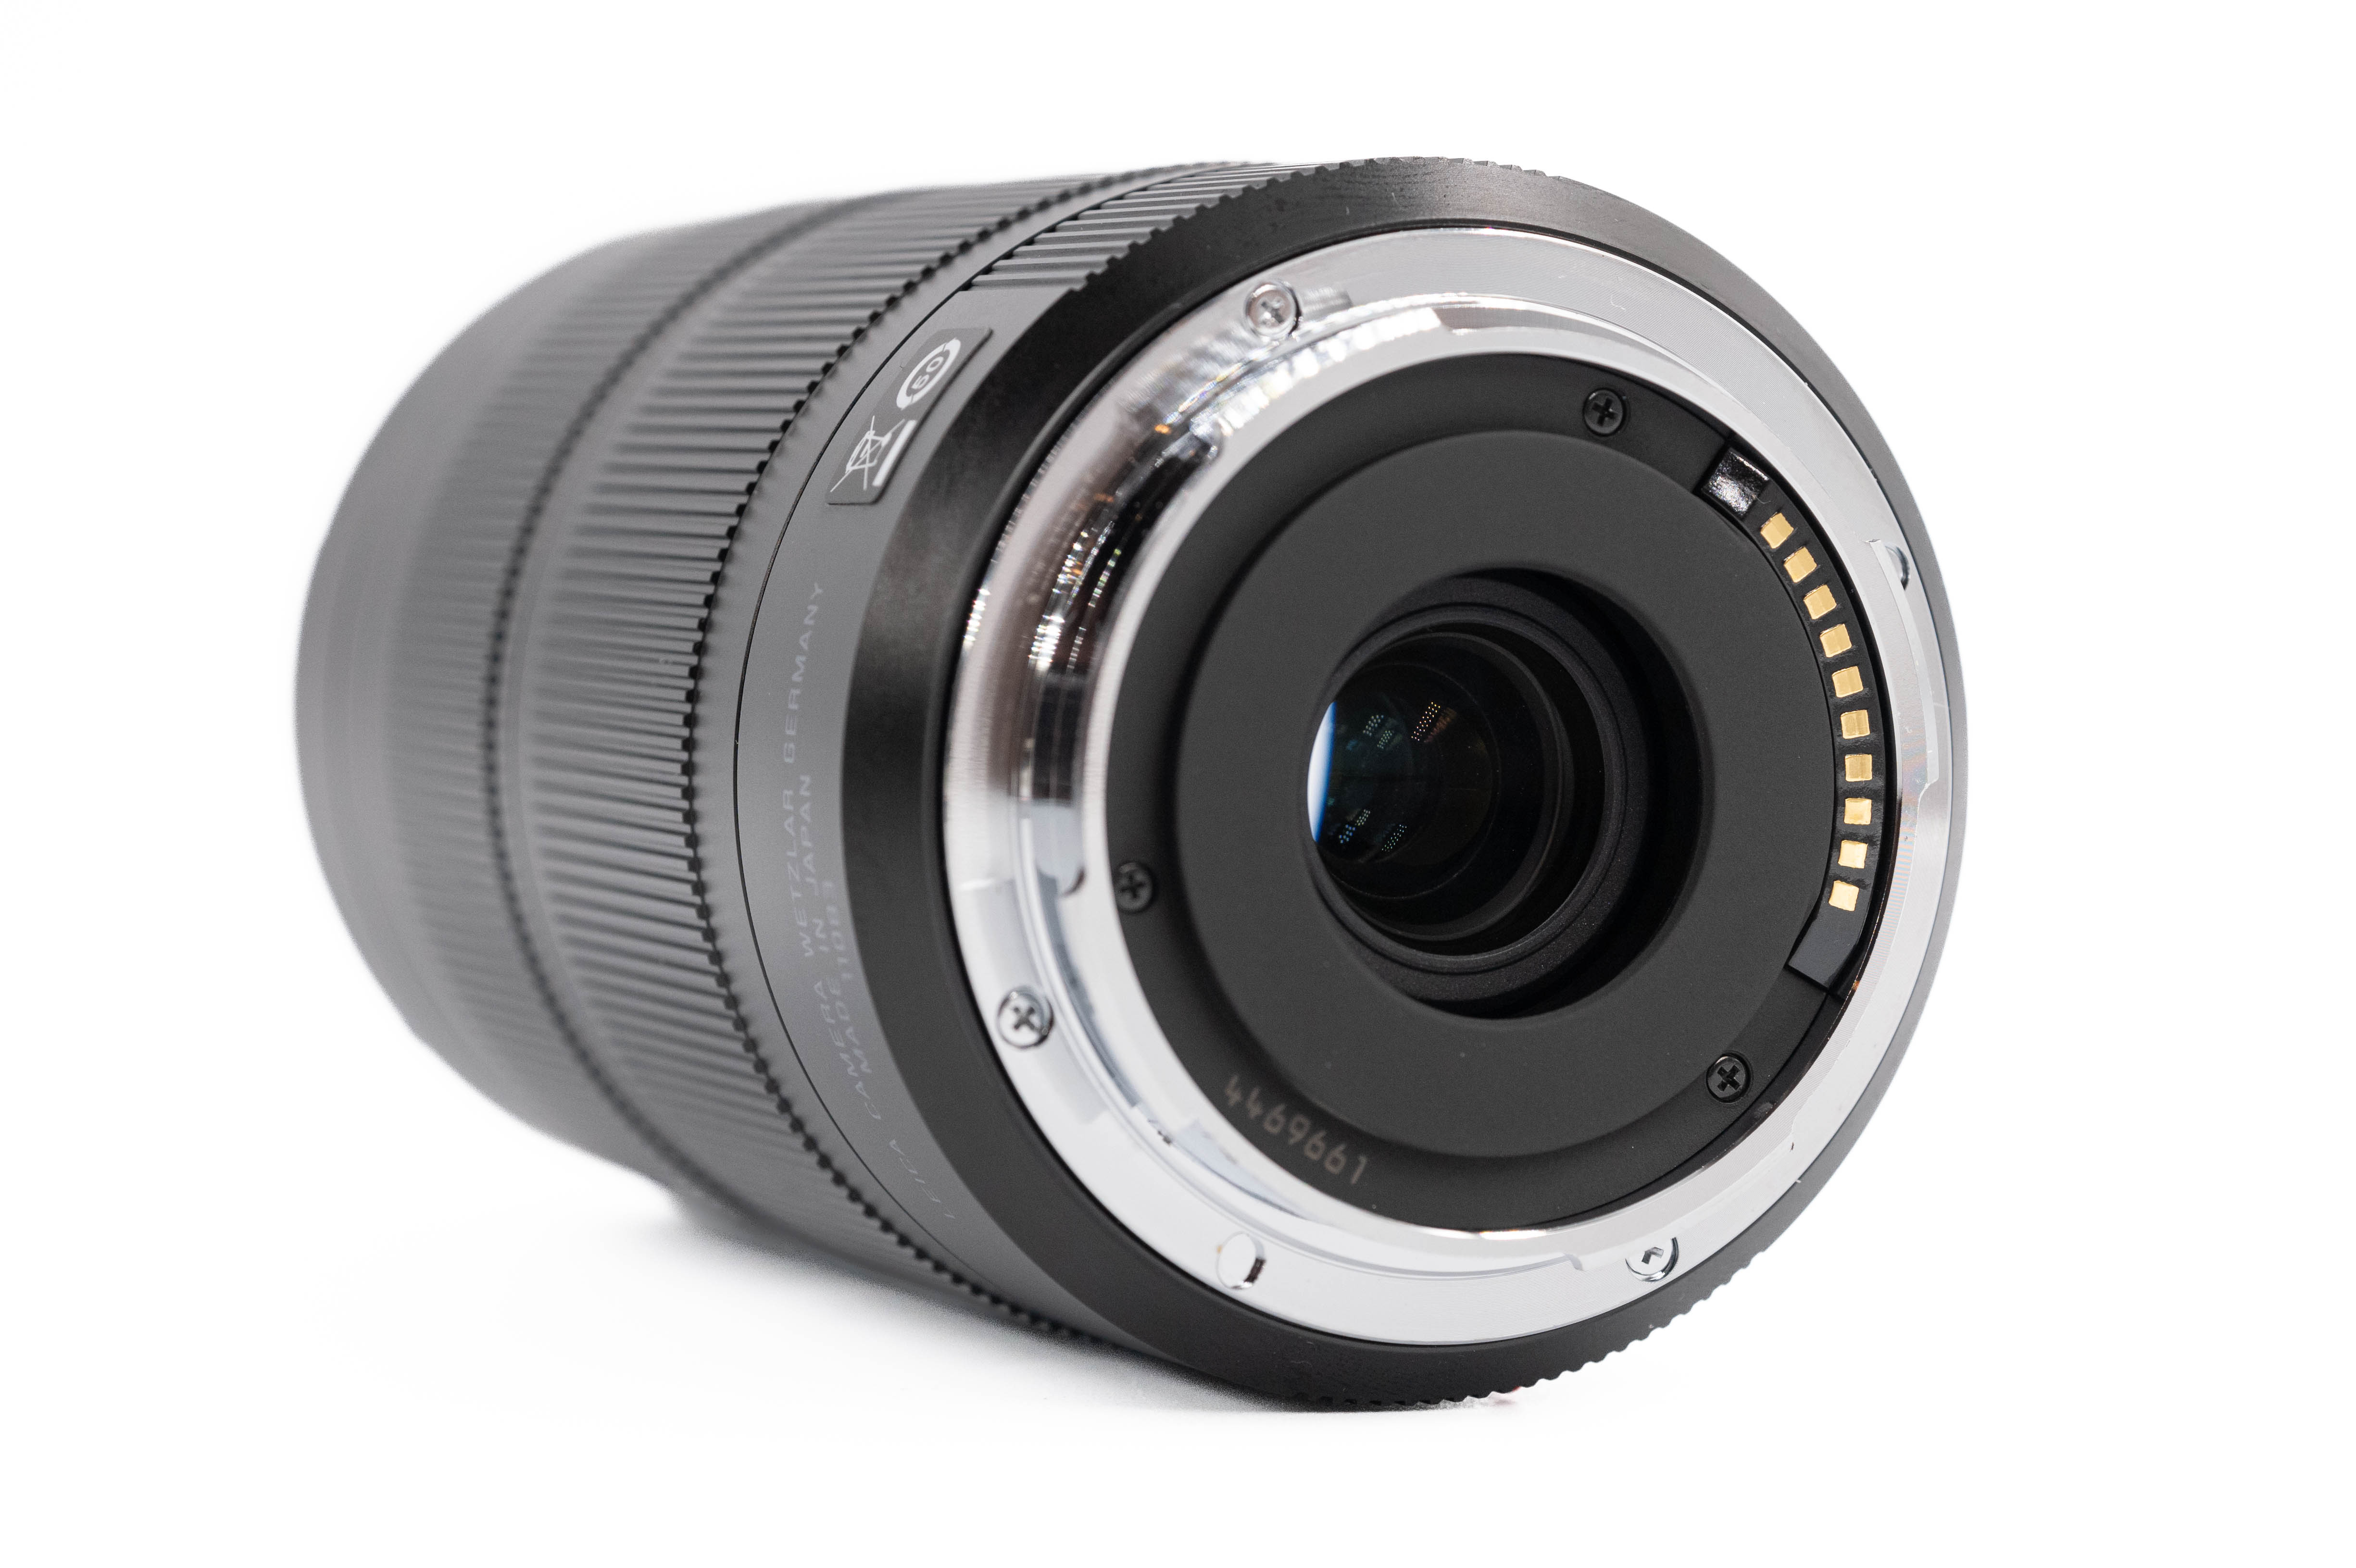 Leica APO-Vario-Elmar-TL 55-135MM f/3.5-4.5 11083